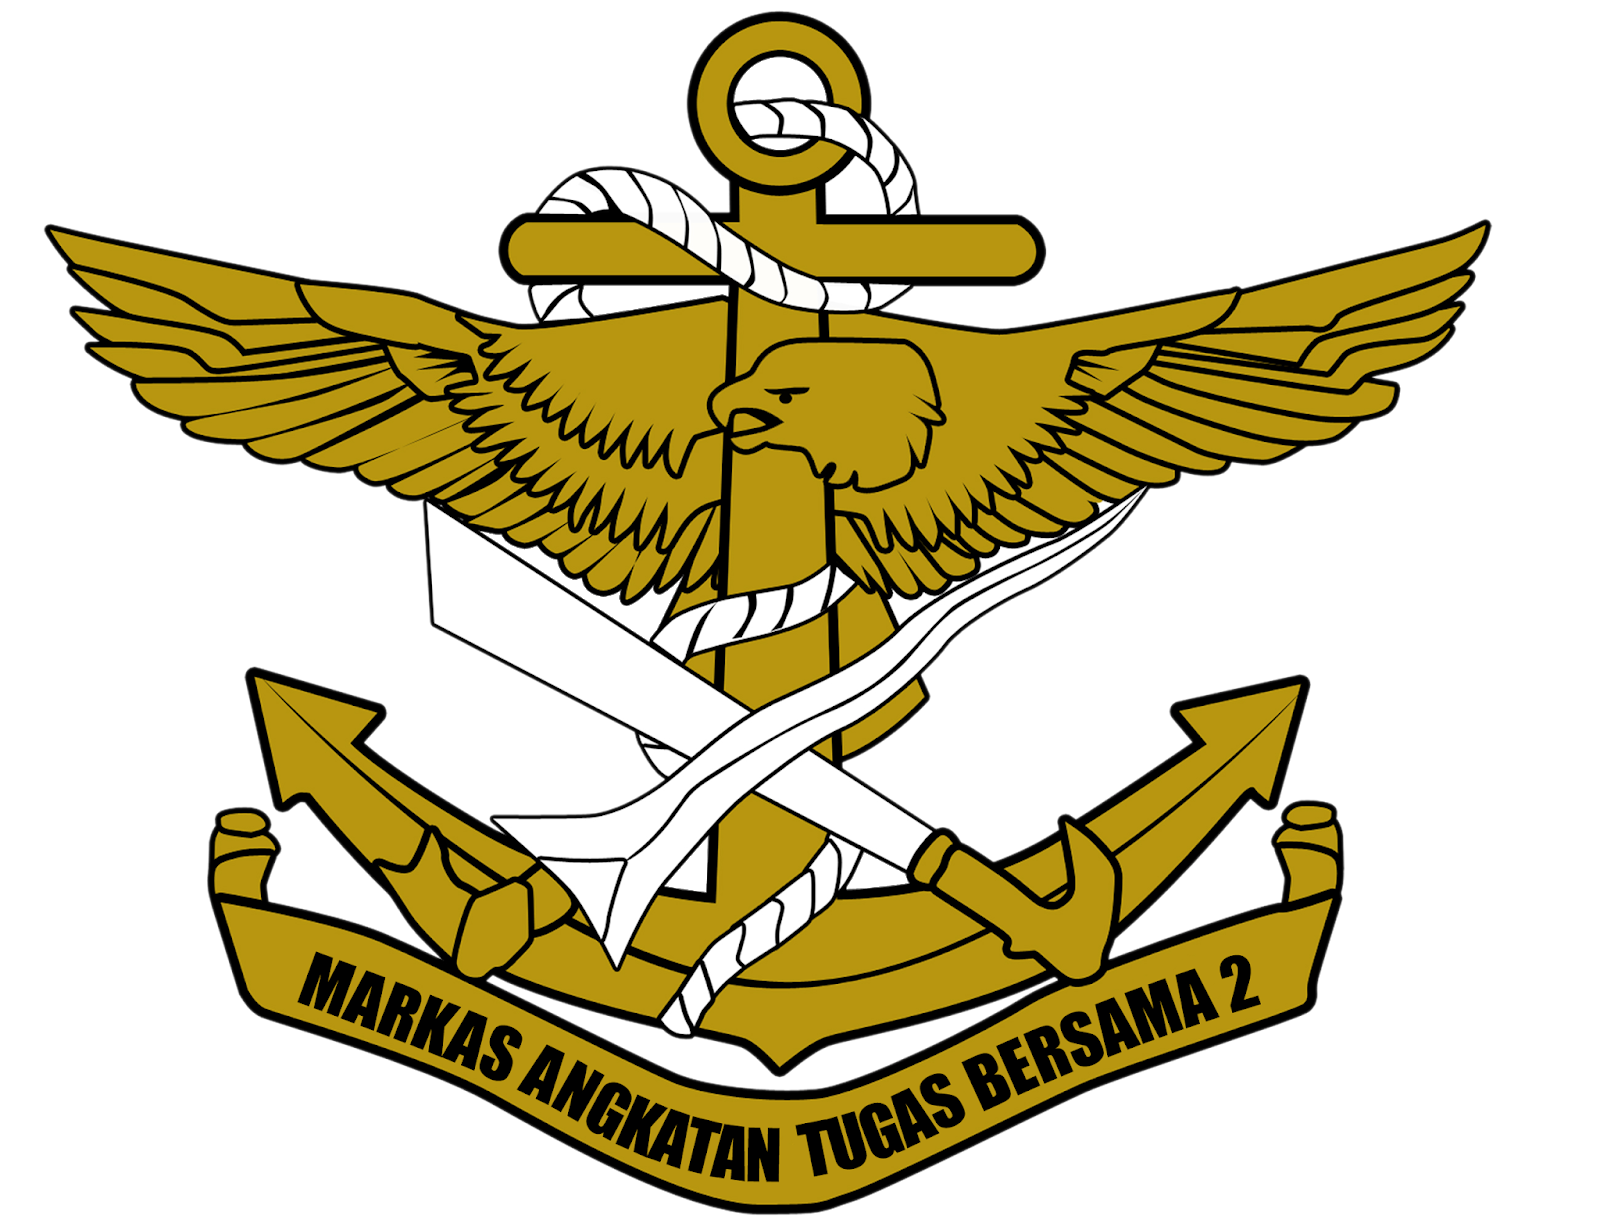 Logo Markas Angkatan Tugas Bersama Malaysia Logo Collection